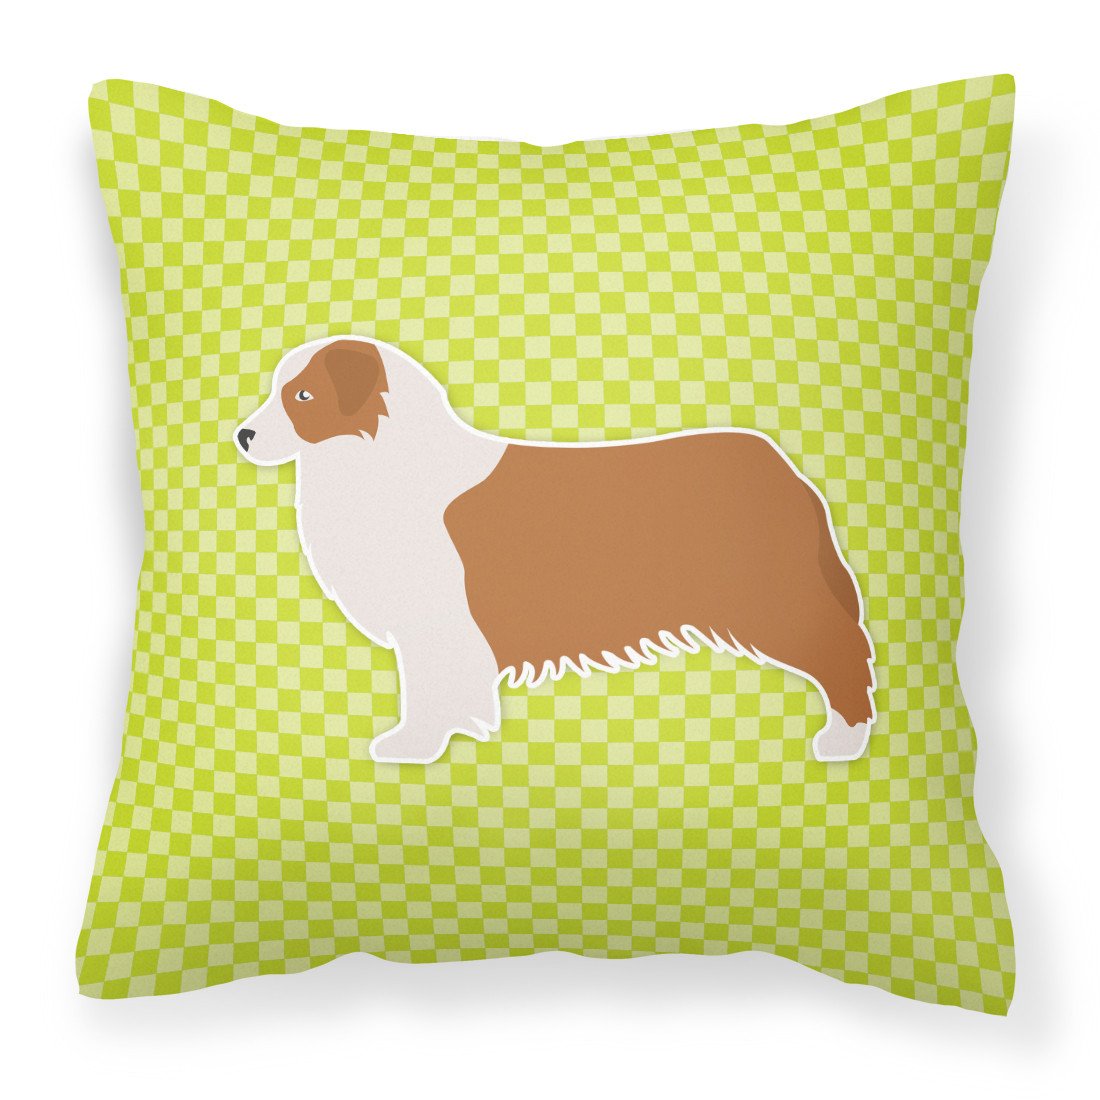 Australian Shepherd Dog Checkerboard Green Fabric Decorative Pillow BB3833PW1818 by Caroline's Treasures